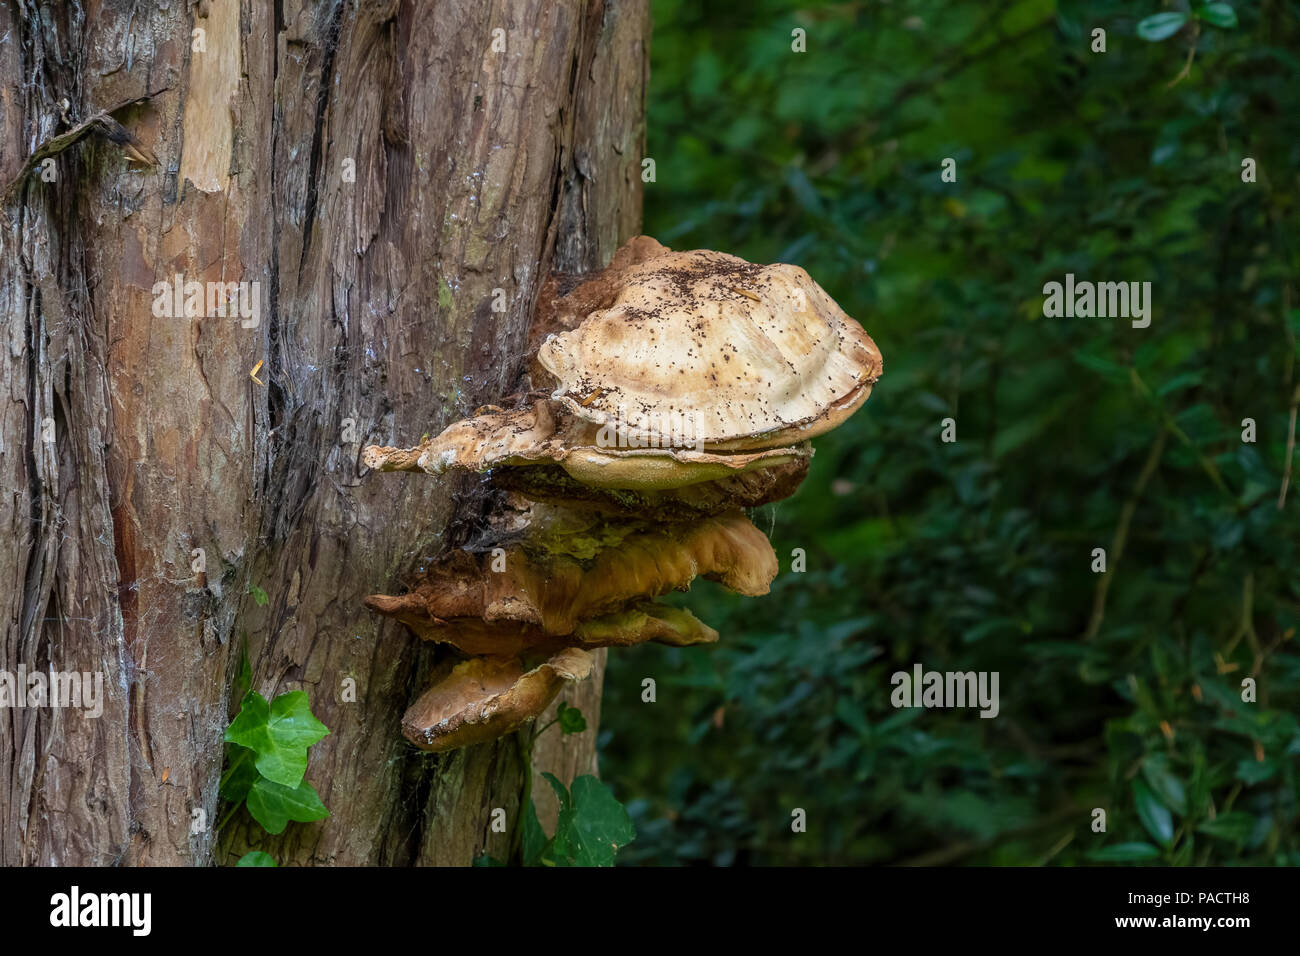 Polyporus squamosus mushrooms growing on a tree trunk Stock Photo